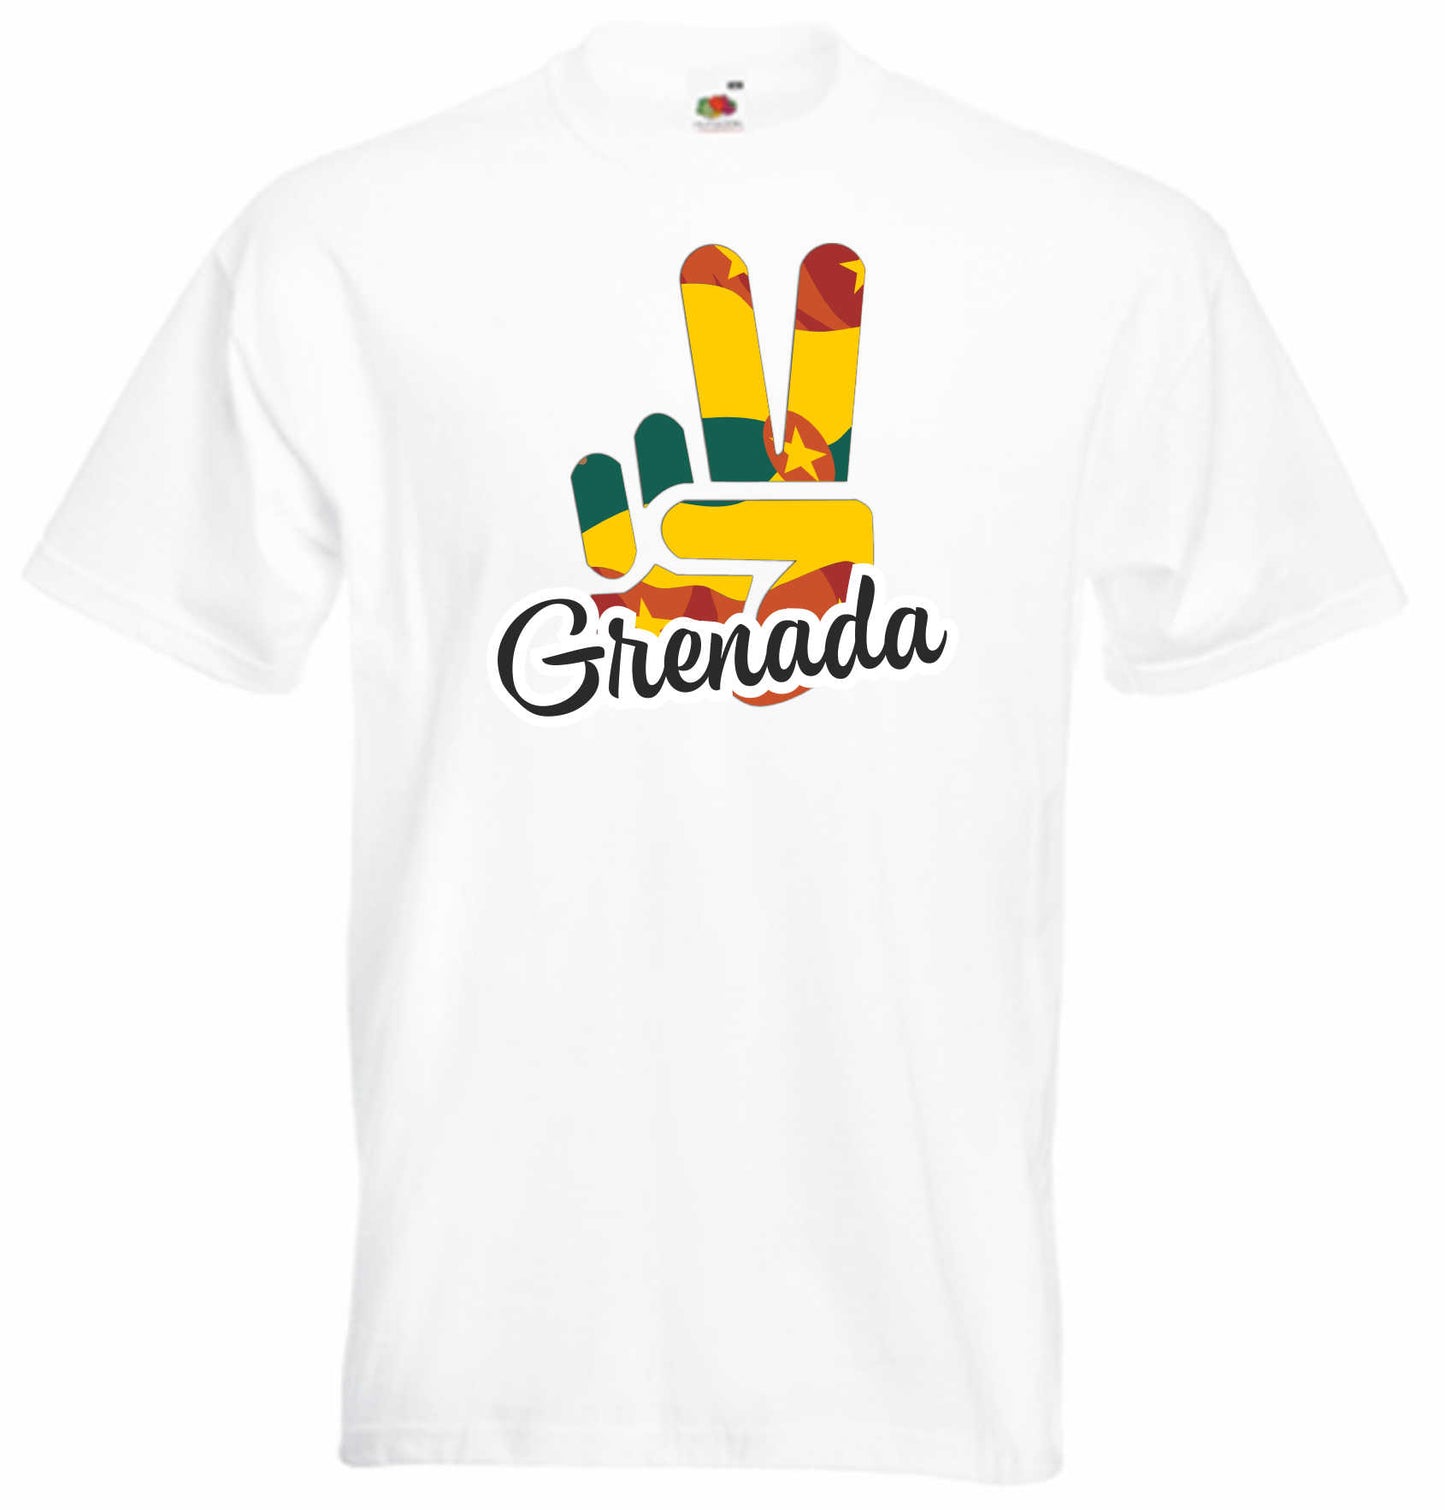 T-Shirt Herren - Victory - Flagge / Fahne - Grenada - Sieg